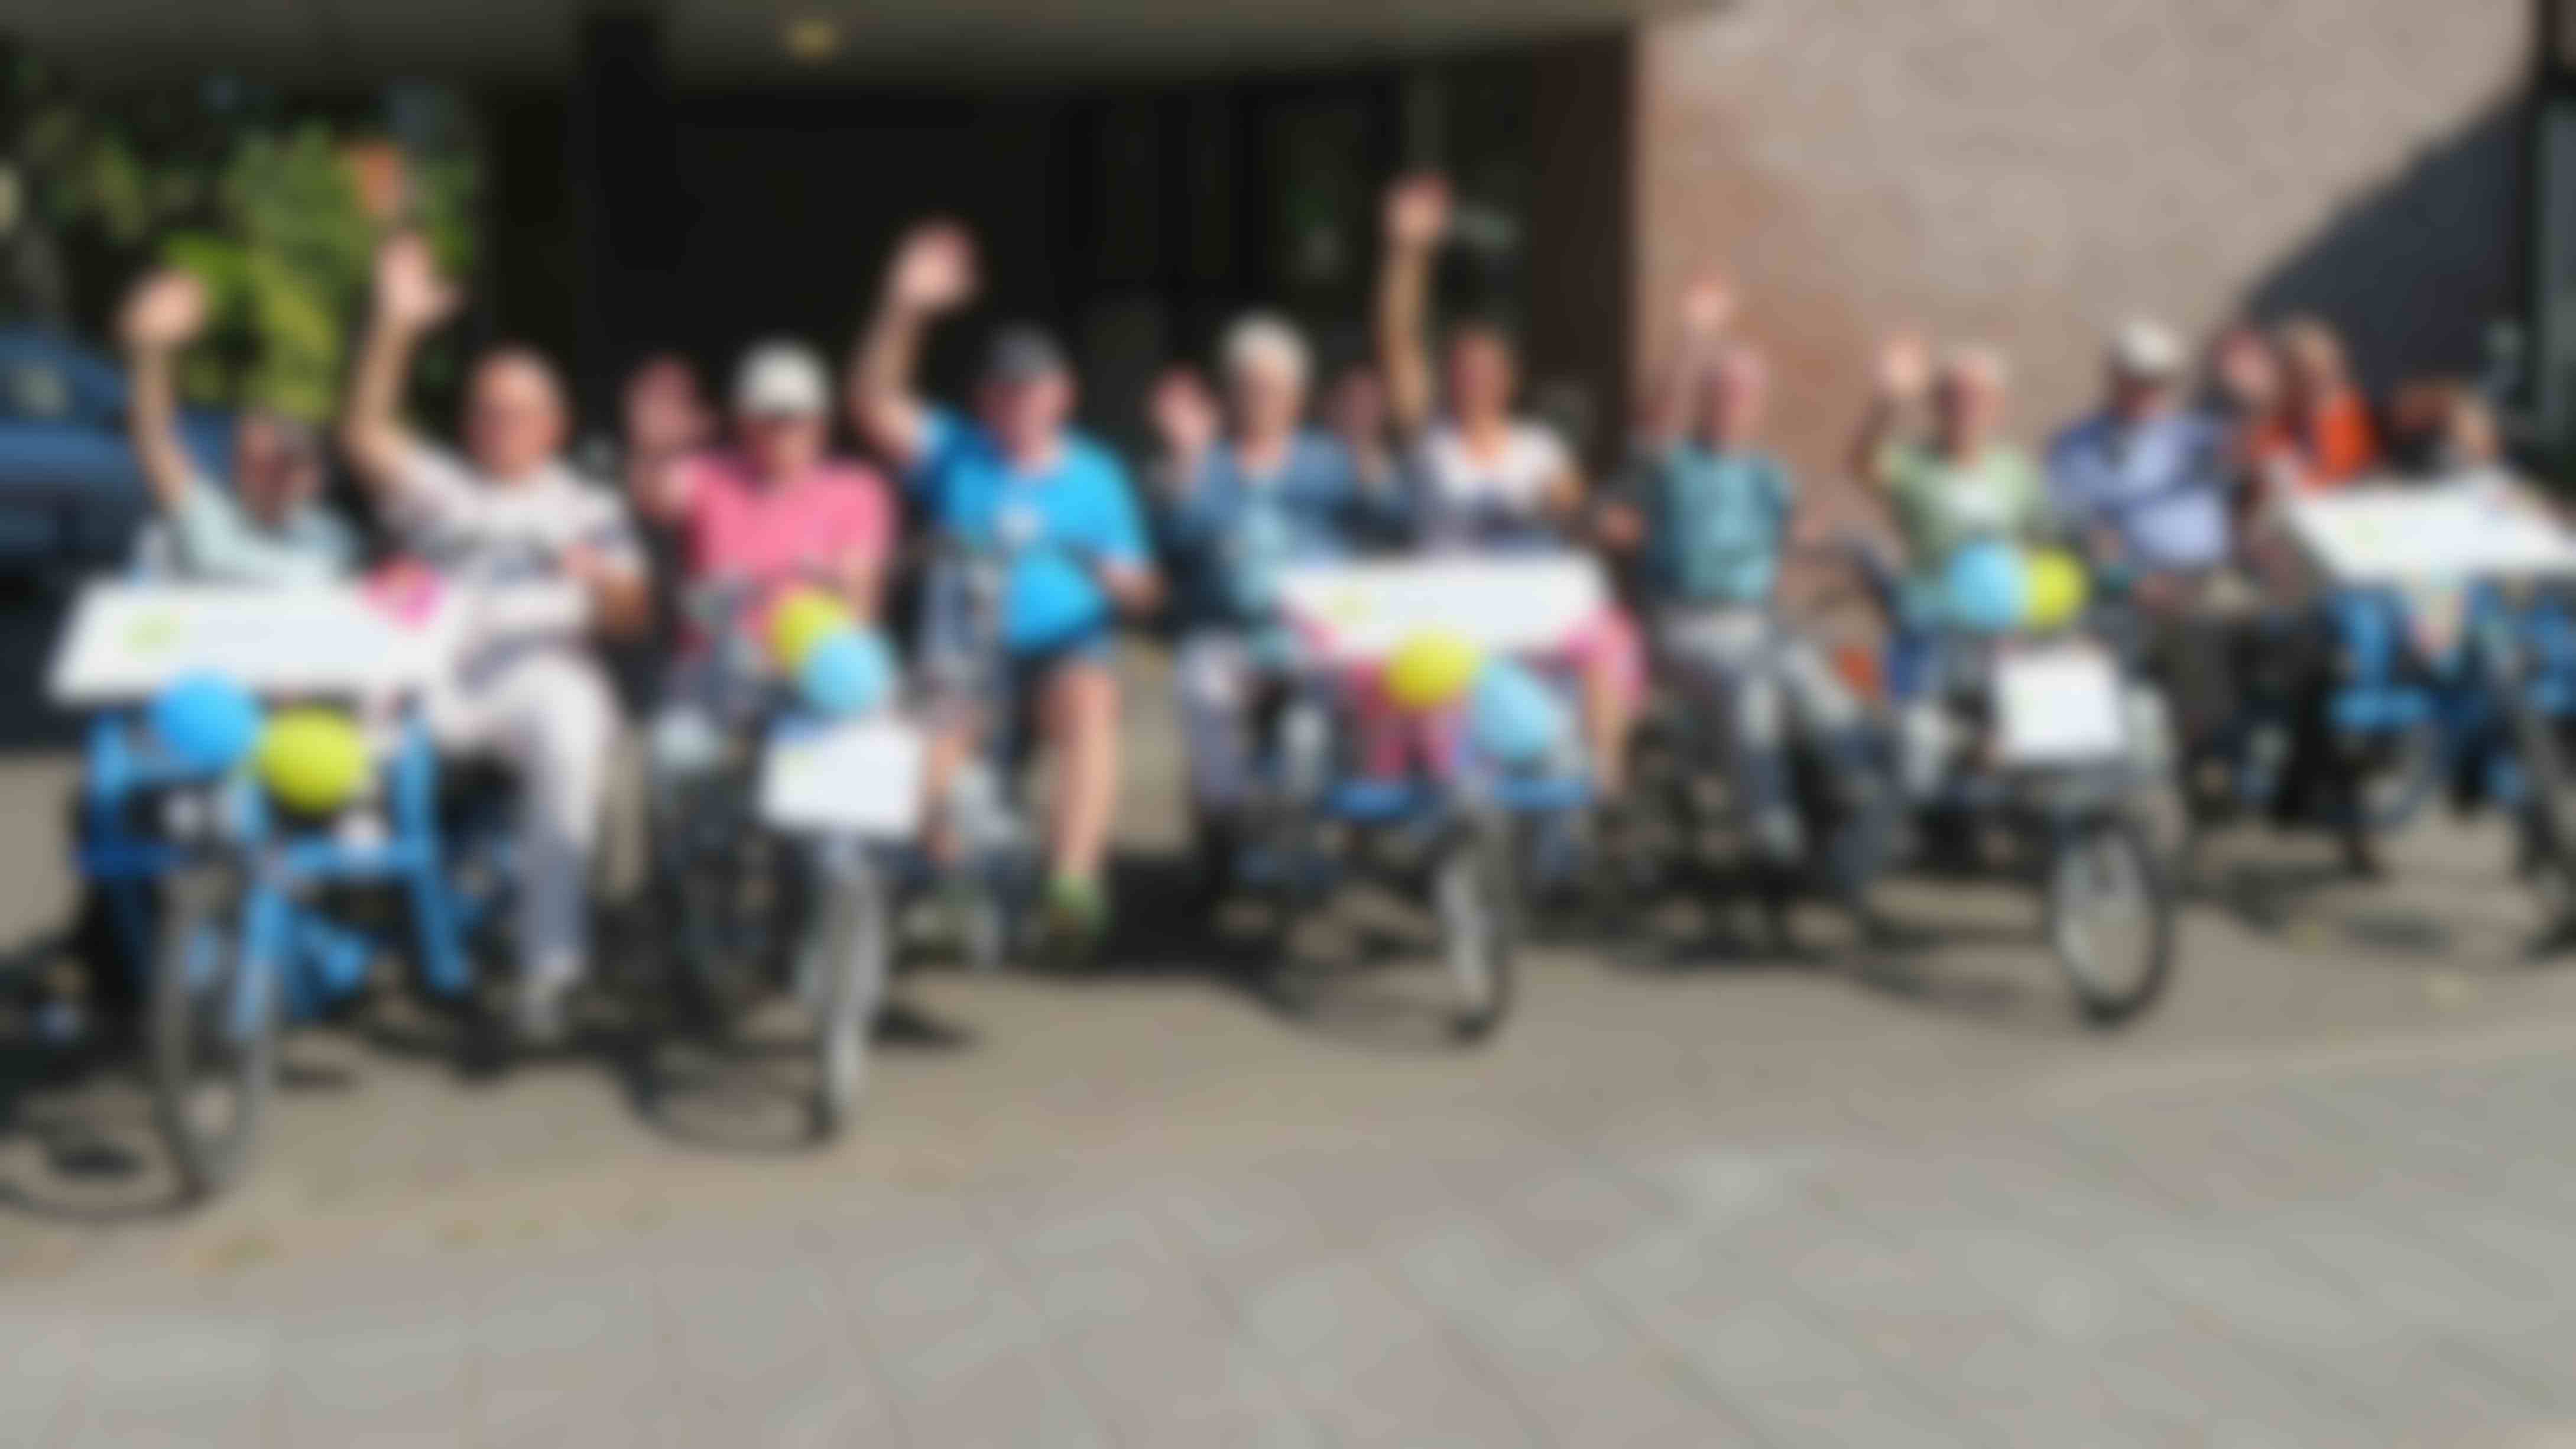 Cycling buddies Apeldoorn and surrounding areas is expanding: Volunteers needed for the Beekbergen team